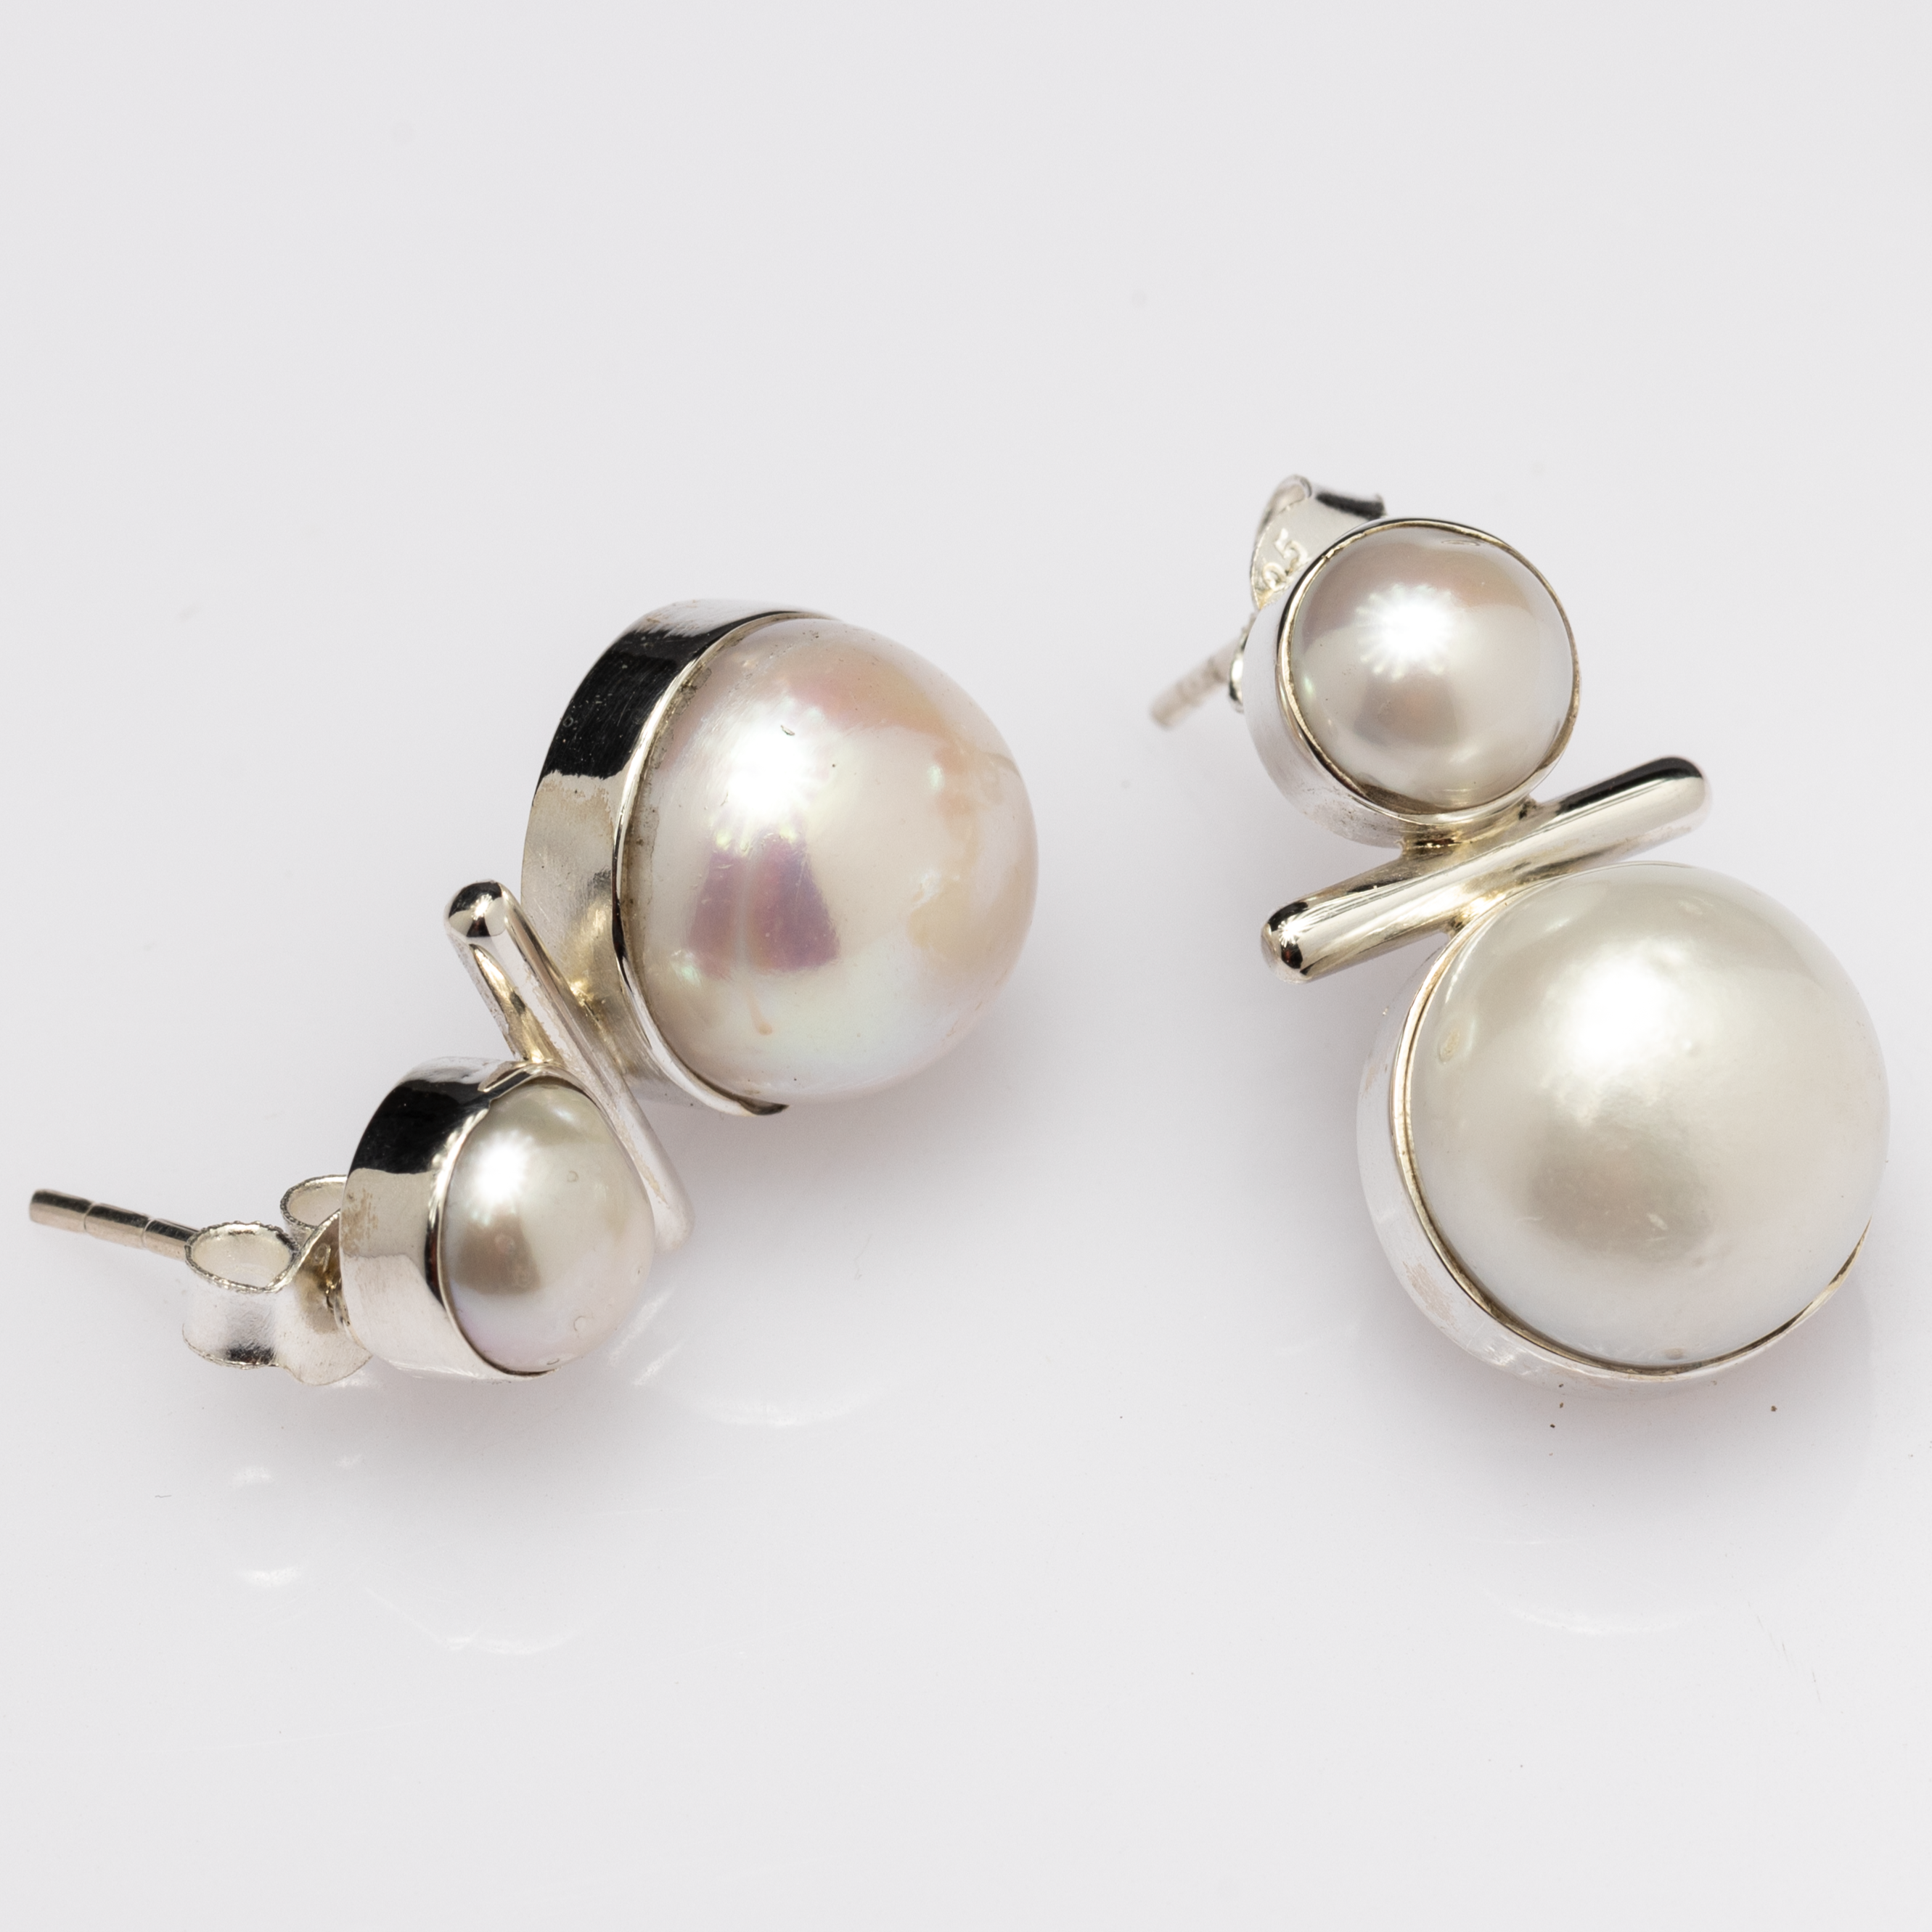 Buy White Pearl Earrings for Women Online in India